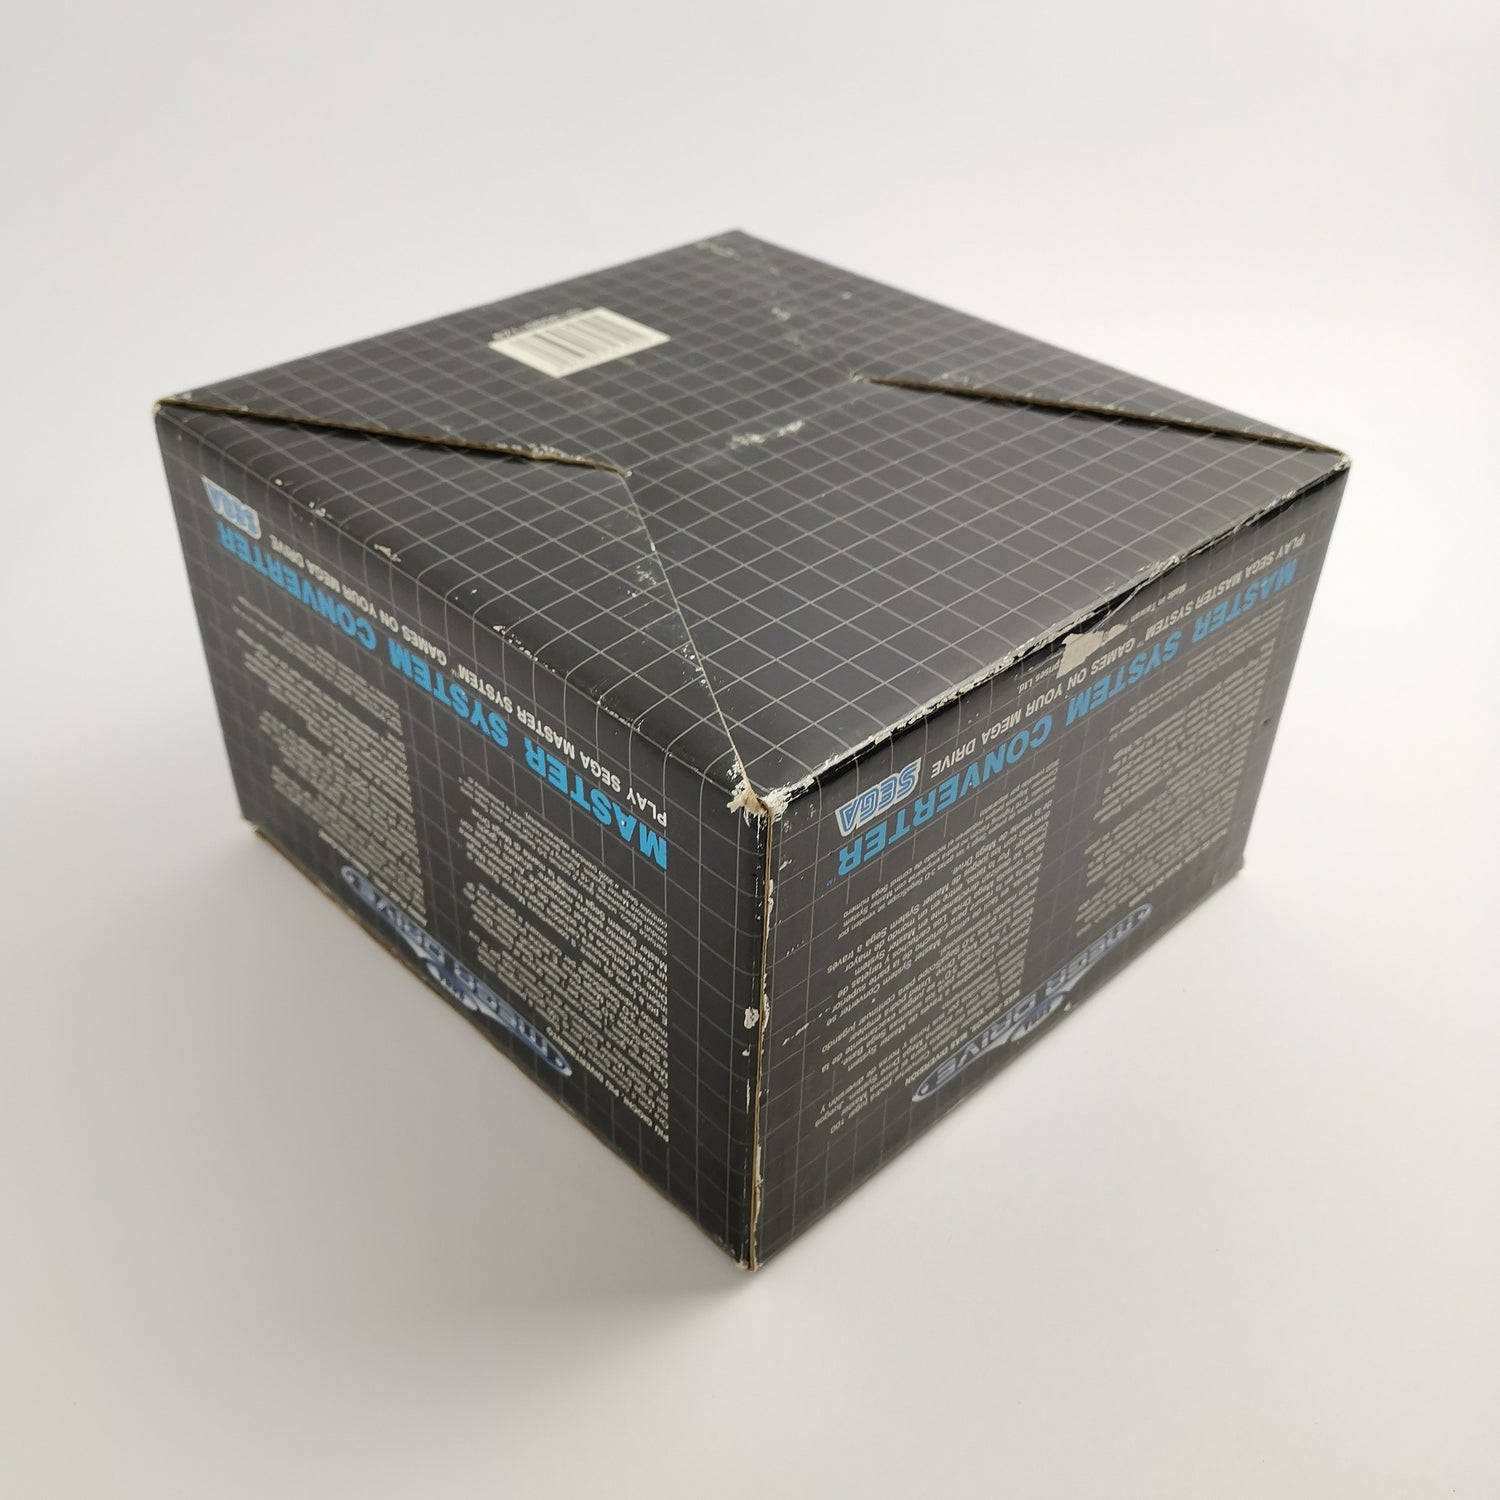 Sega Mega Drive Adapter: Master System Converter | MegaDrive - OVP PAL [2]